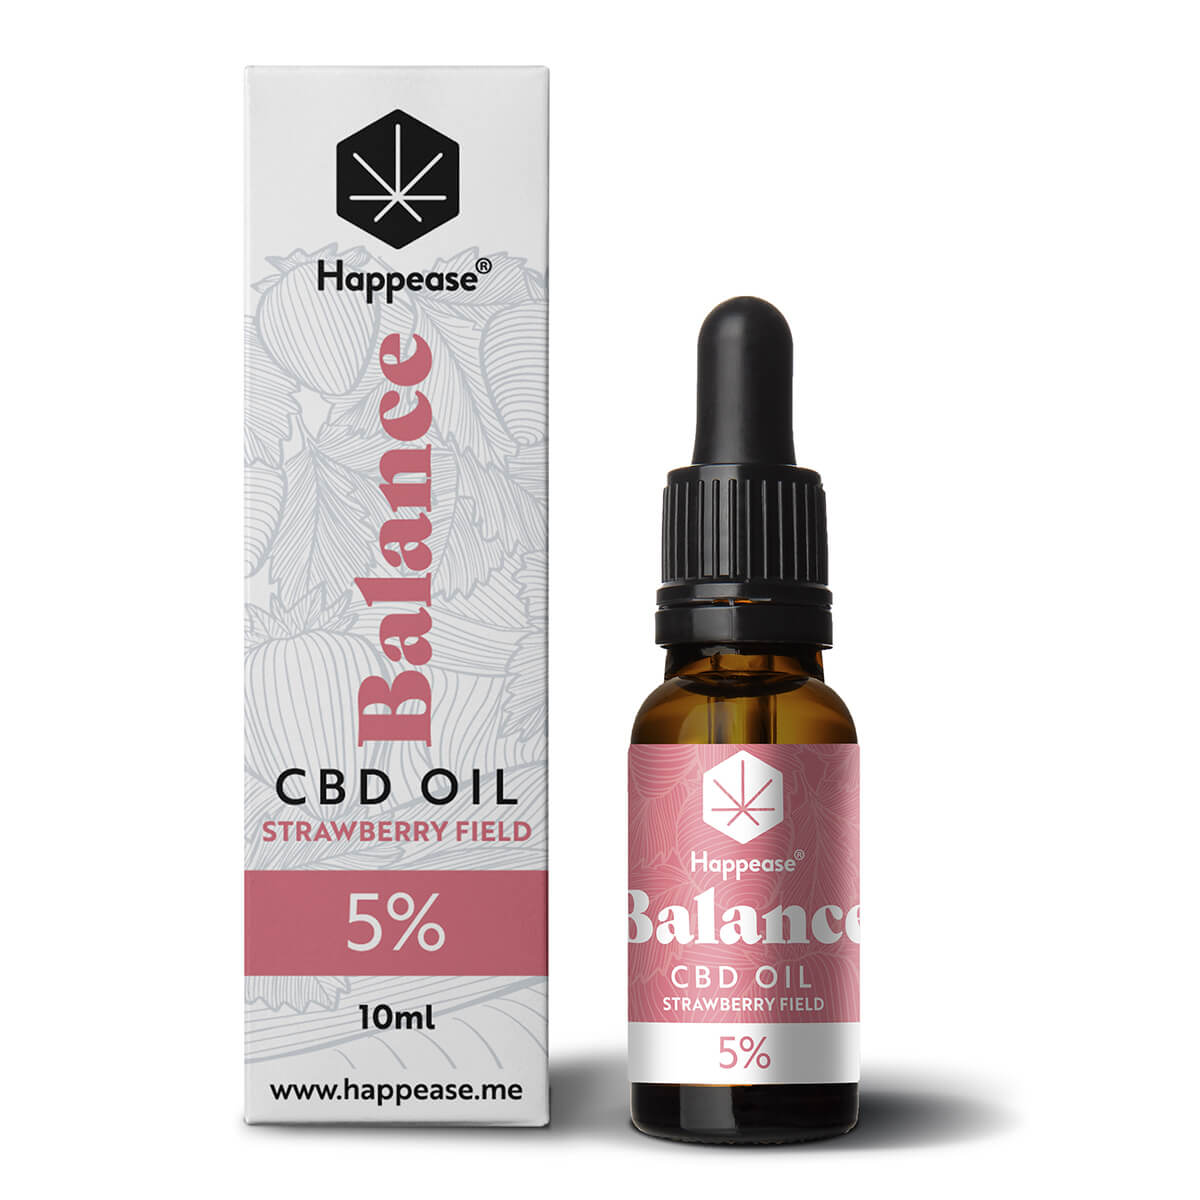 Happease Balance 5% CBD Oil Strawberry Field (10ml)